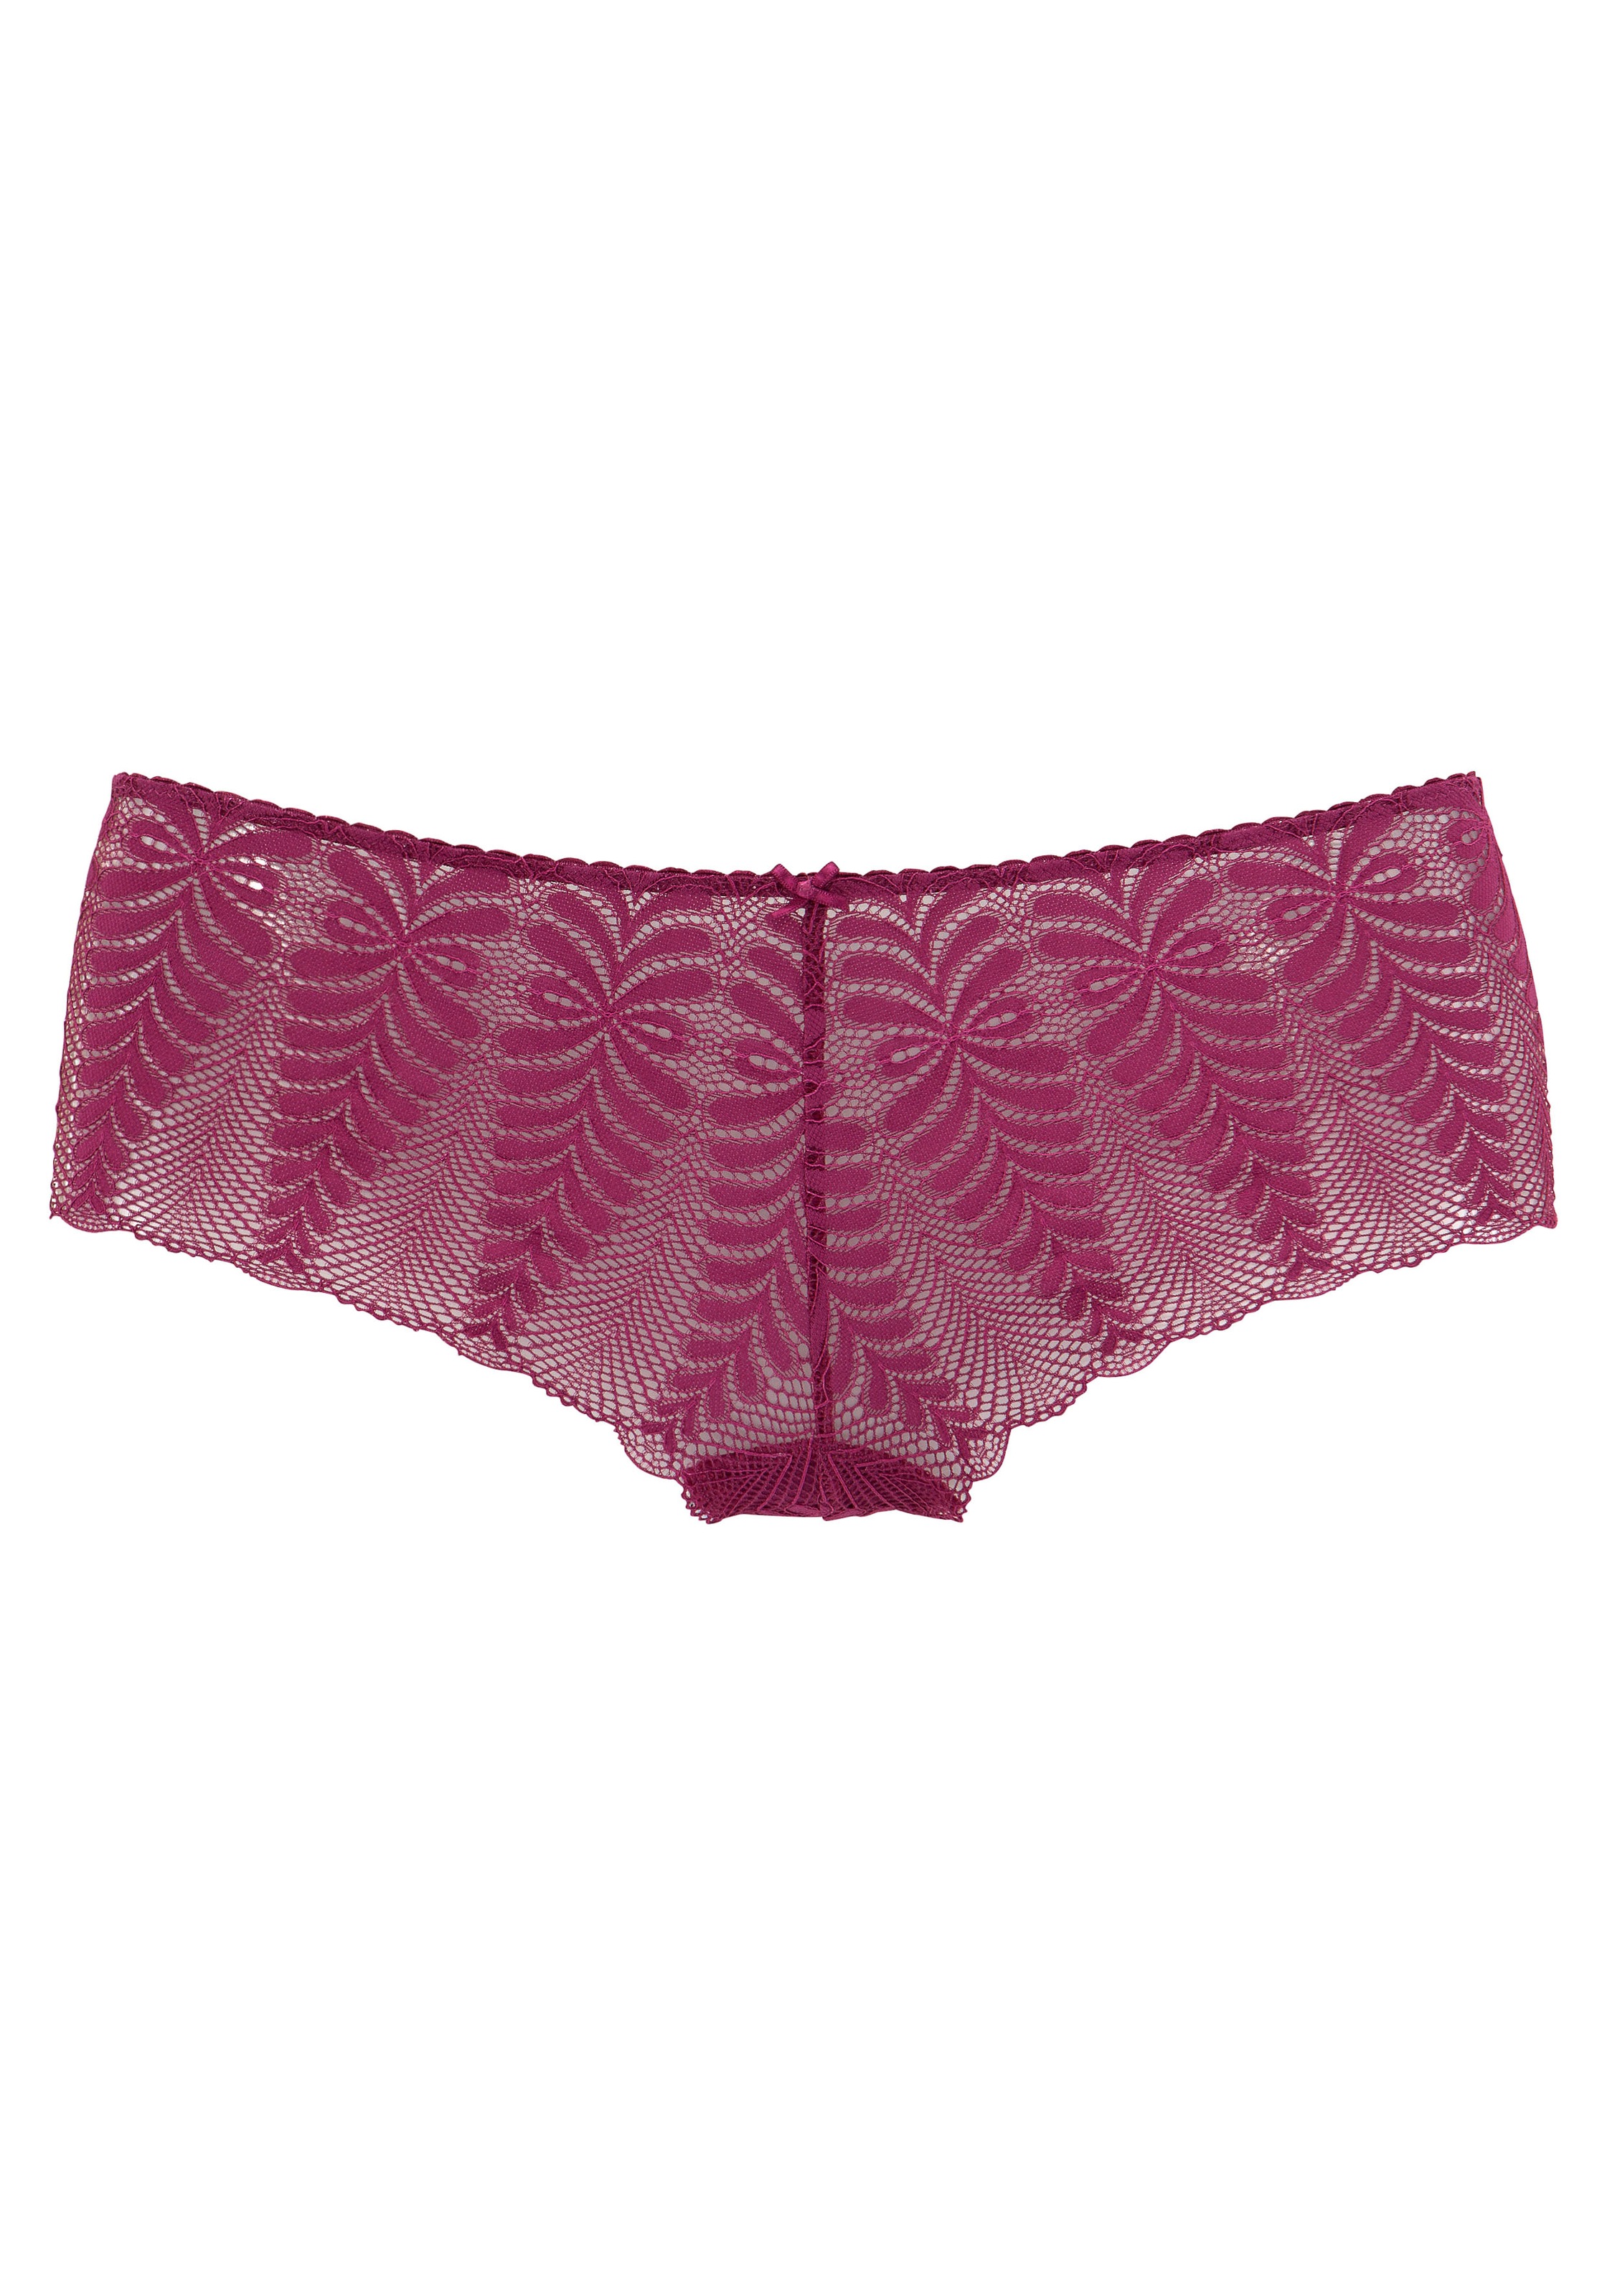 LASCANA Panty »Amira«, aus dezent transparenter Spitze » LASCANA |  Bademode, Unterwäsche & Lingerie online kaufen